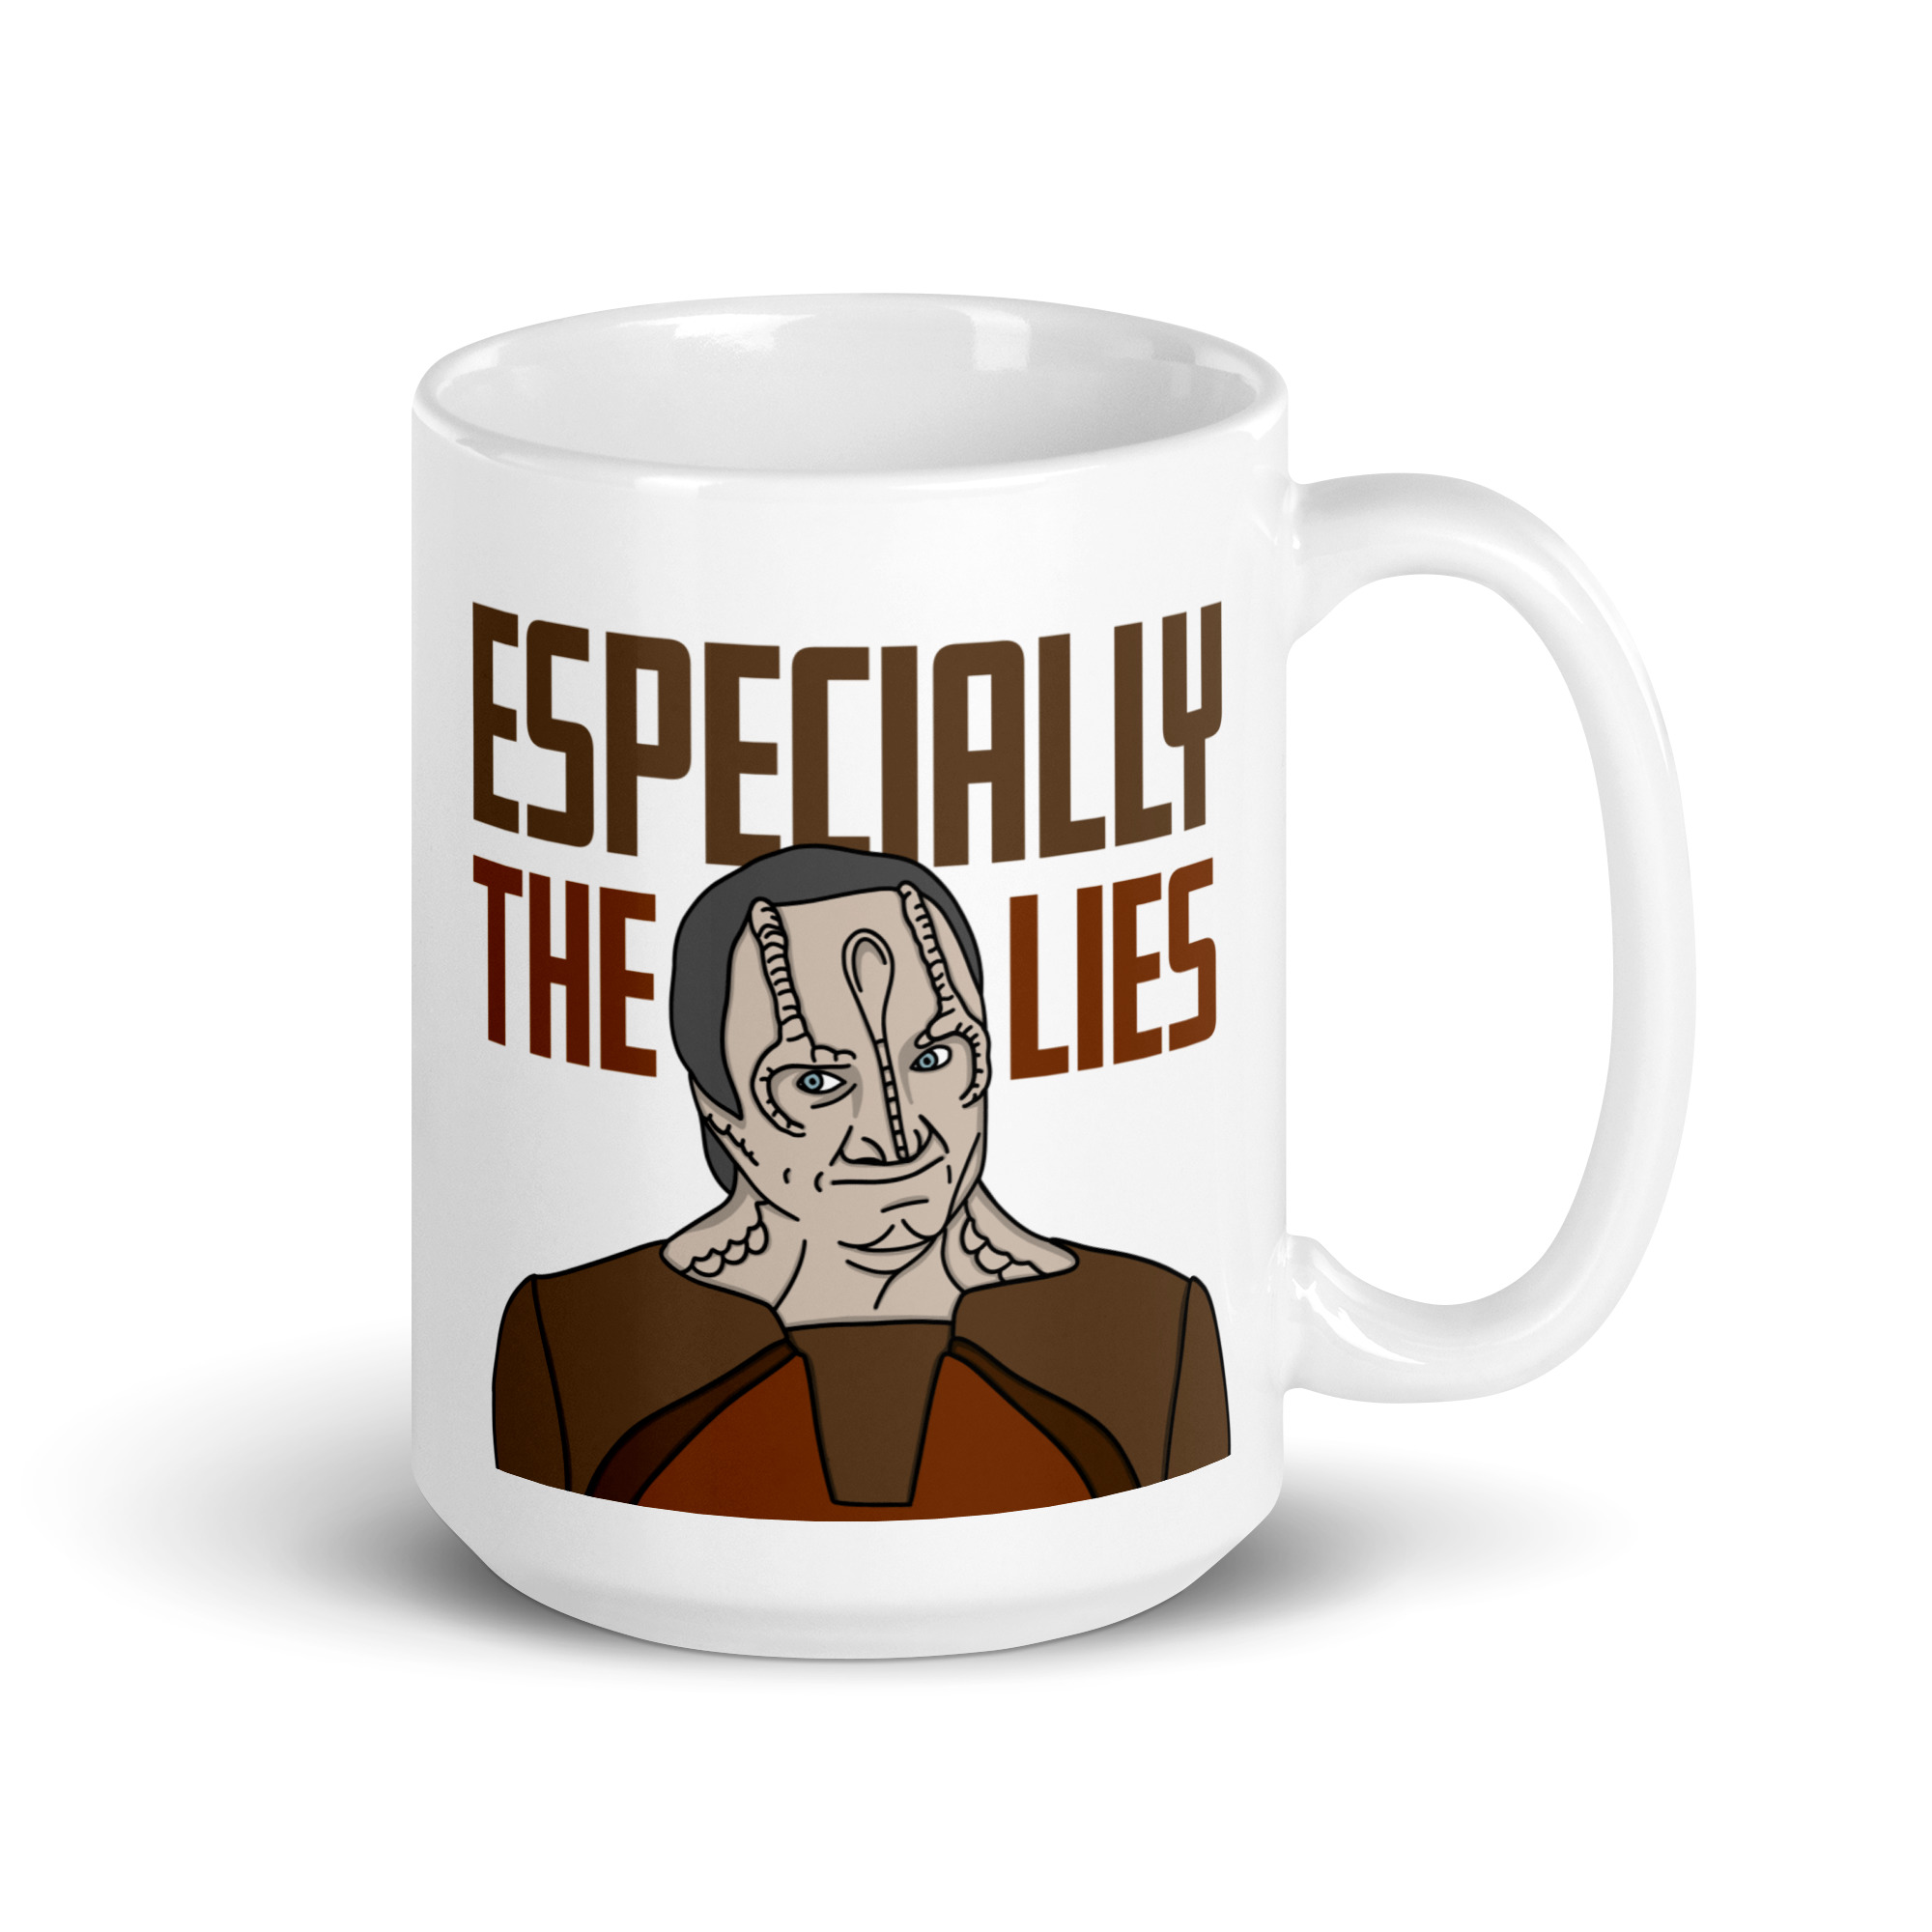 Especially the Lies Mug by Wilde Designs